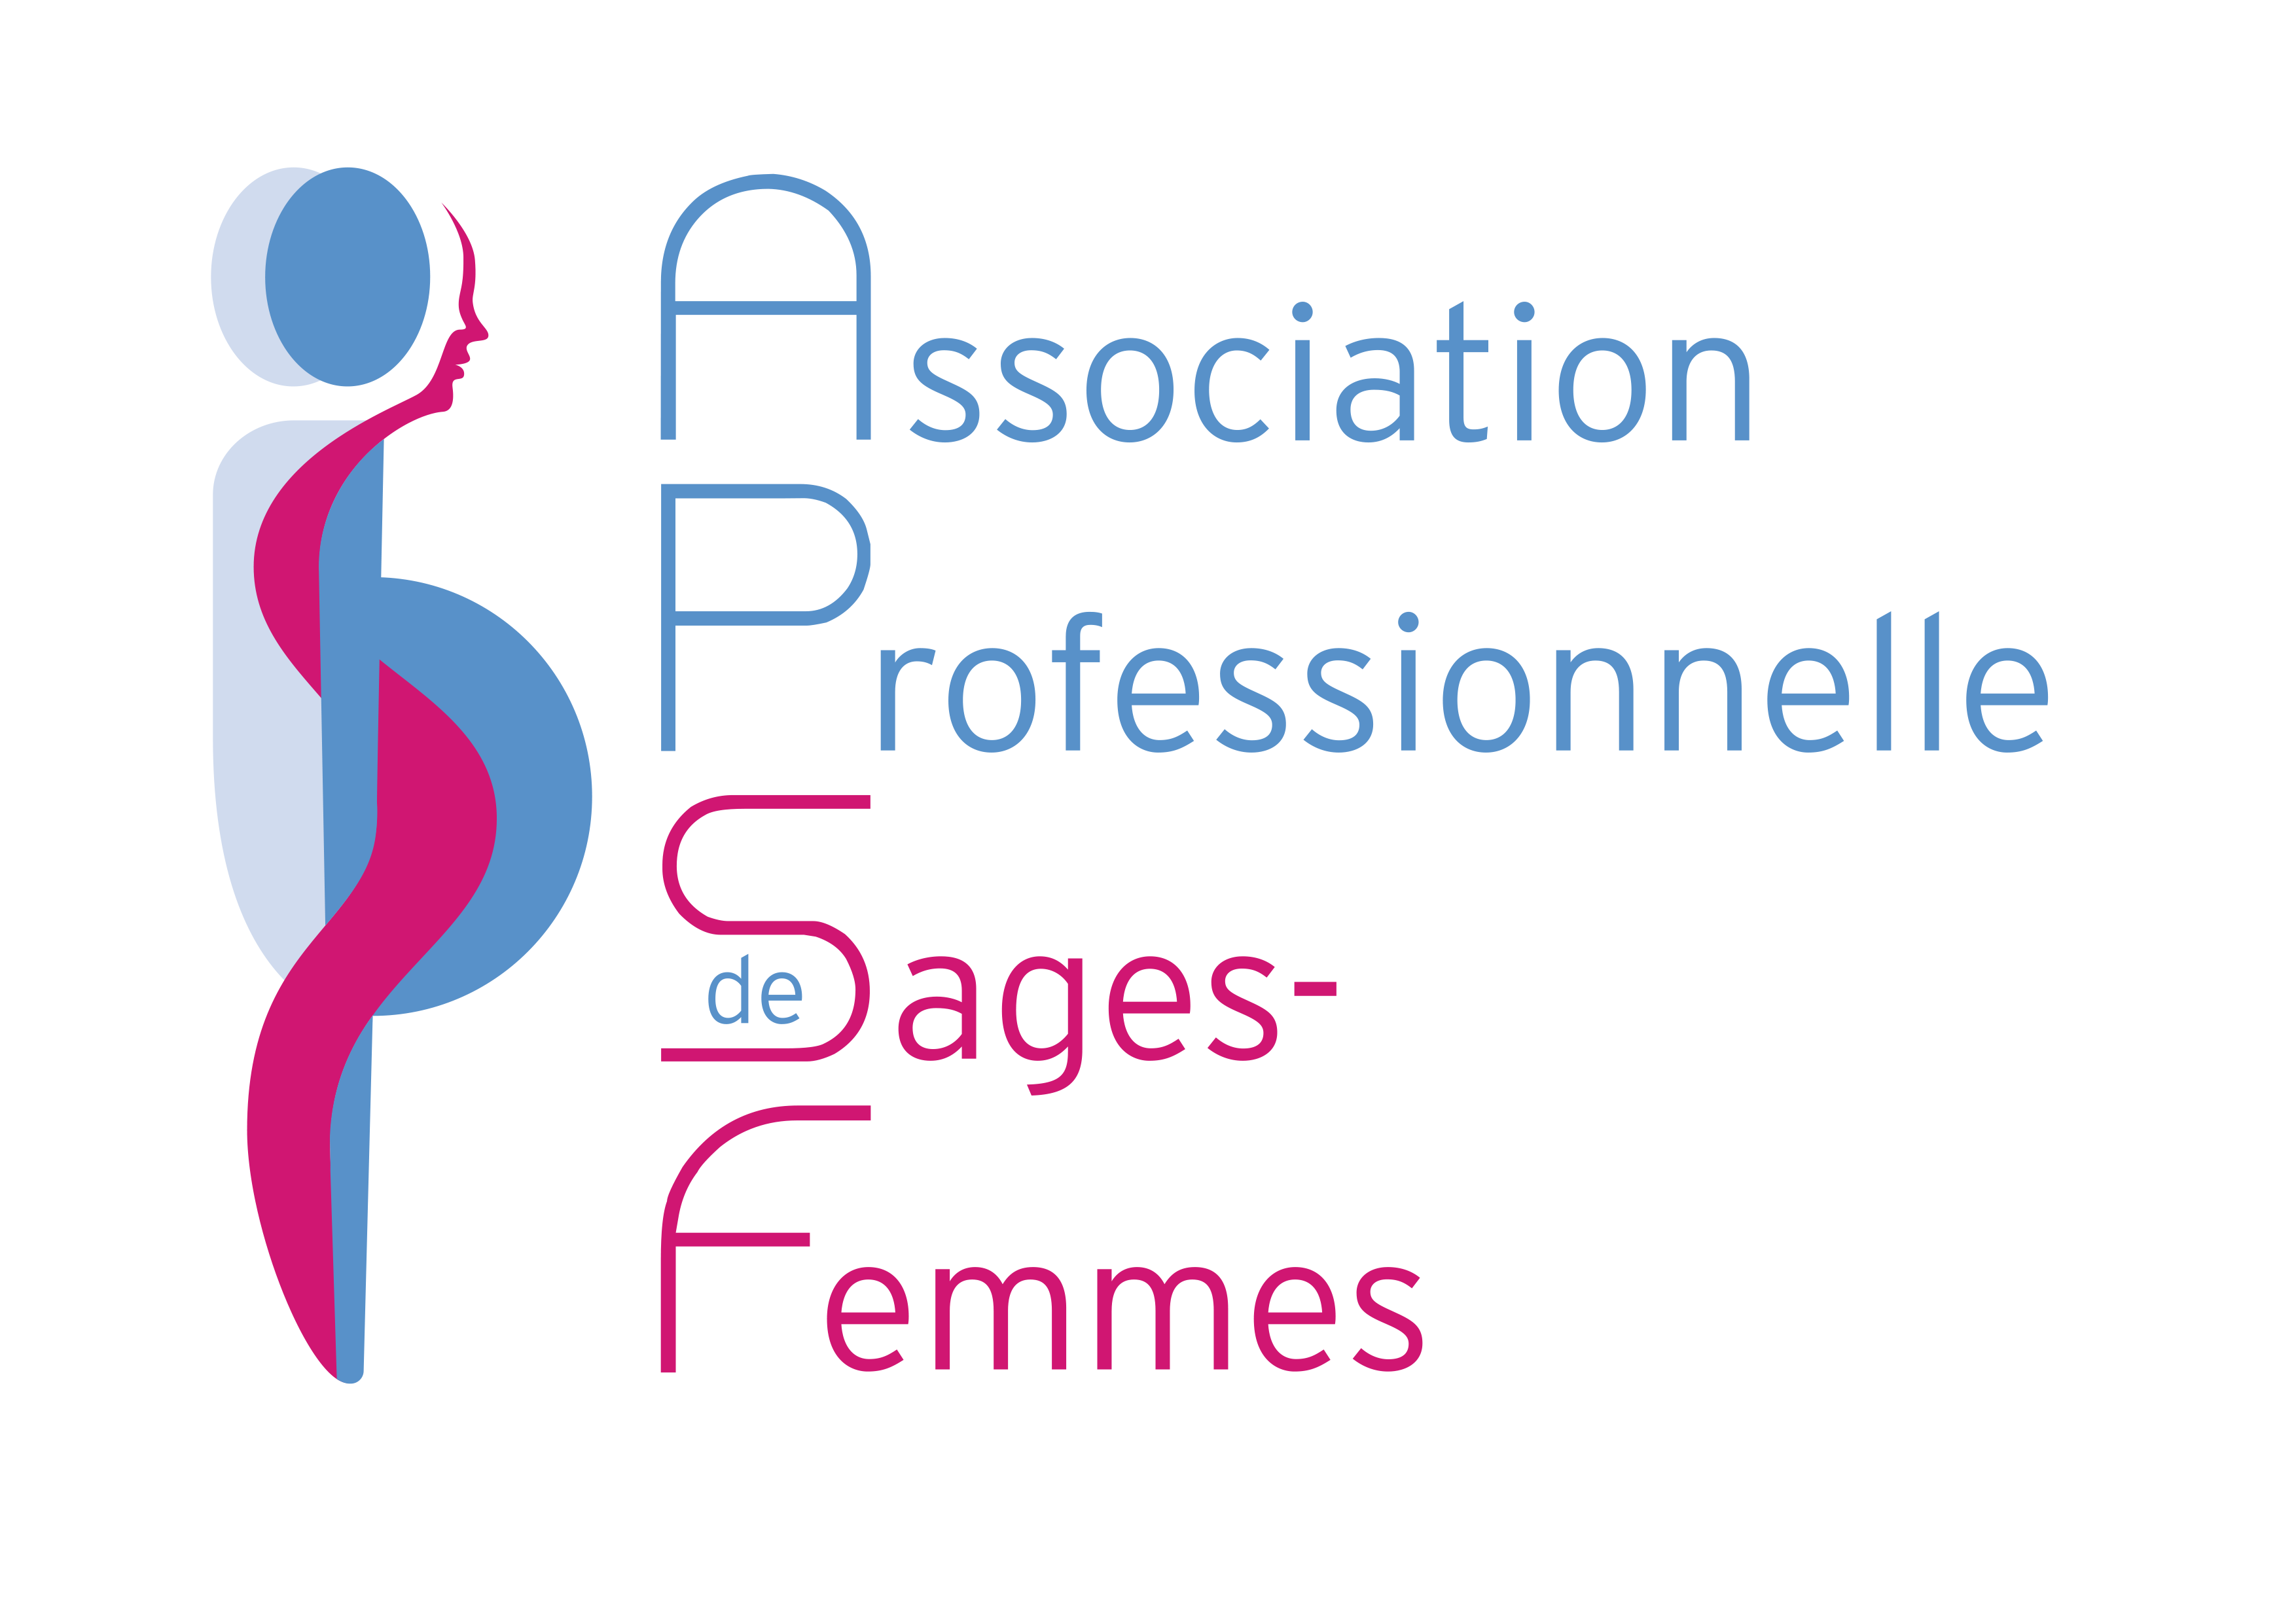 51èmes Assises Nationales des Sages-Femmes - 34ème Session Européenne et Francophones